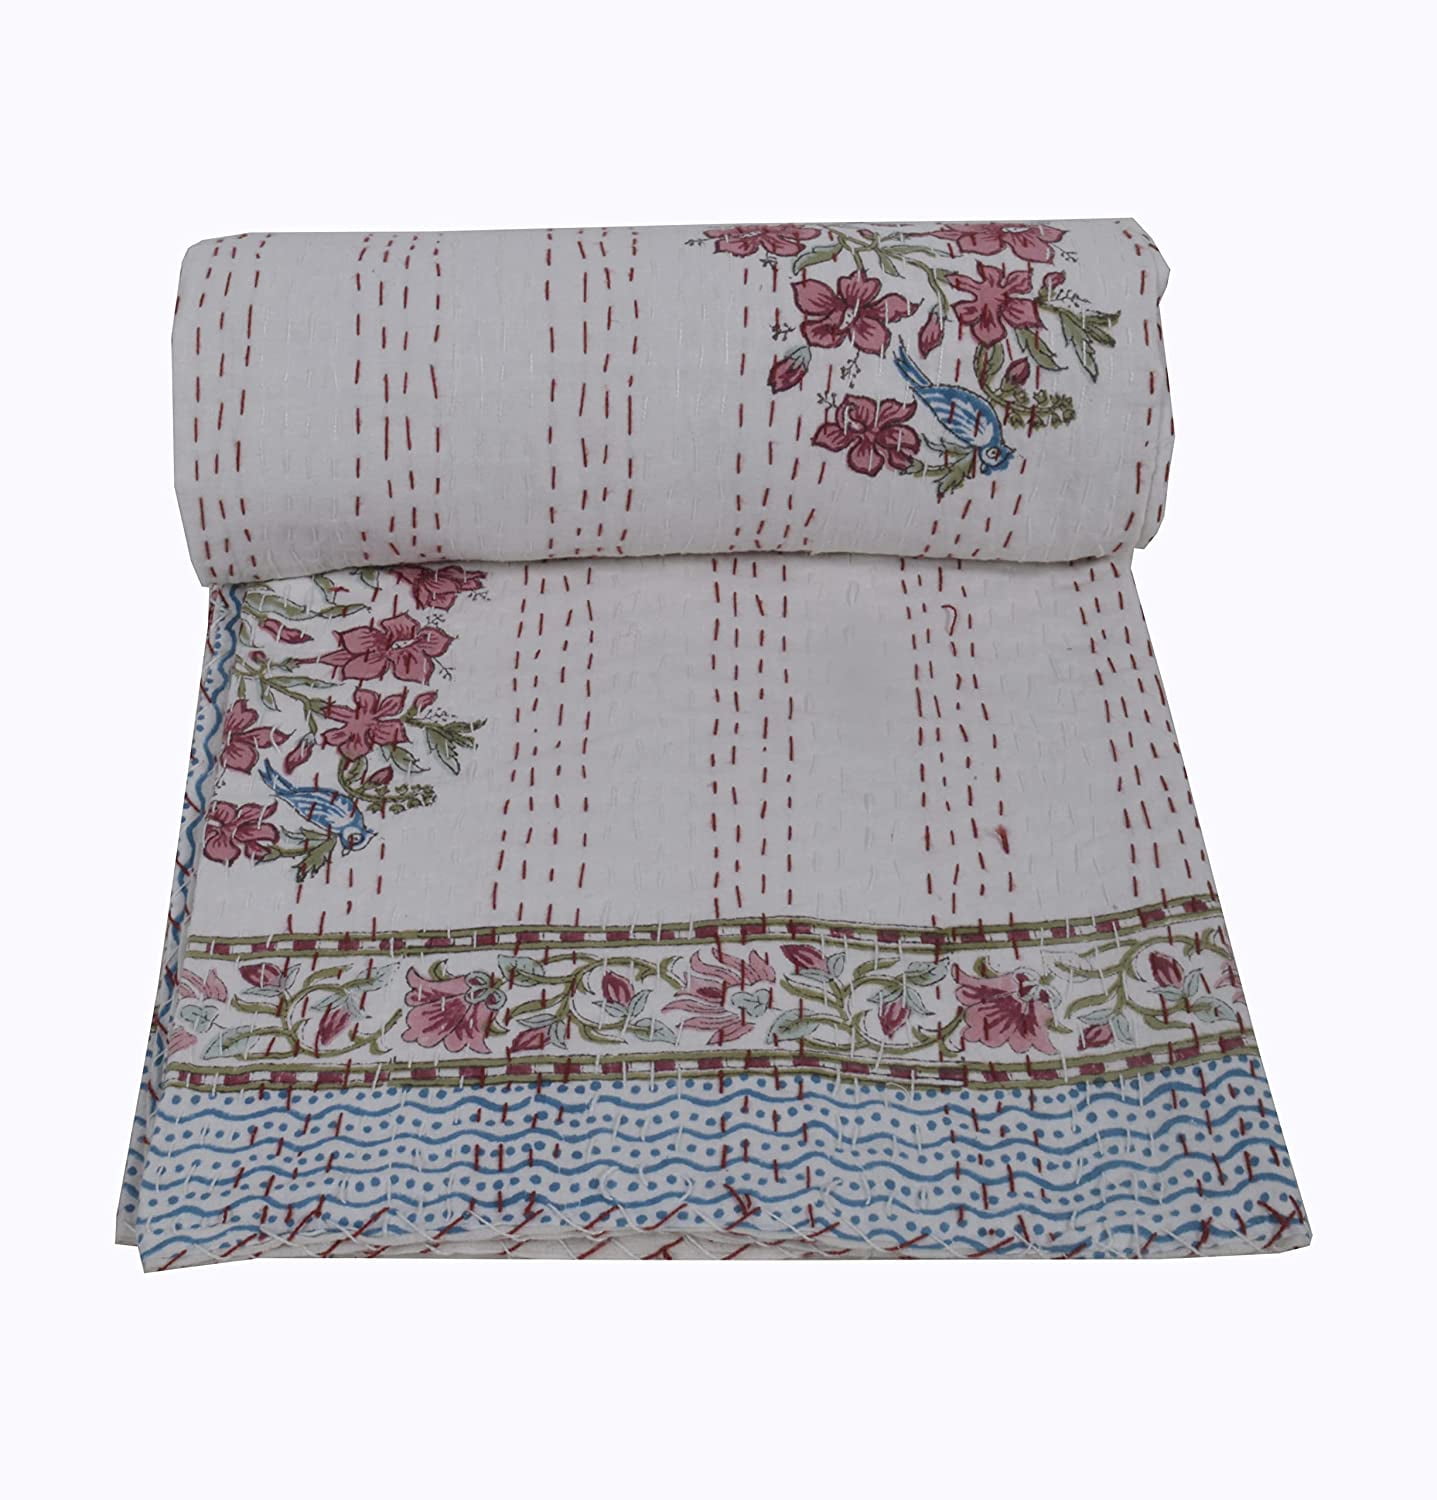 Indian Handmade Cotton Twin Cotton Kantha Quilt Throw Blanket Bedspread Throw 